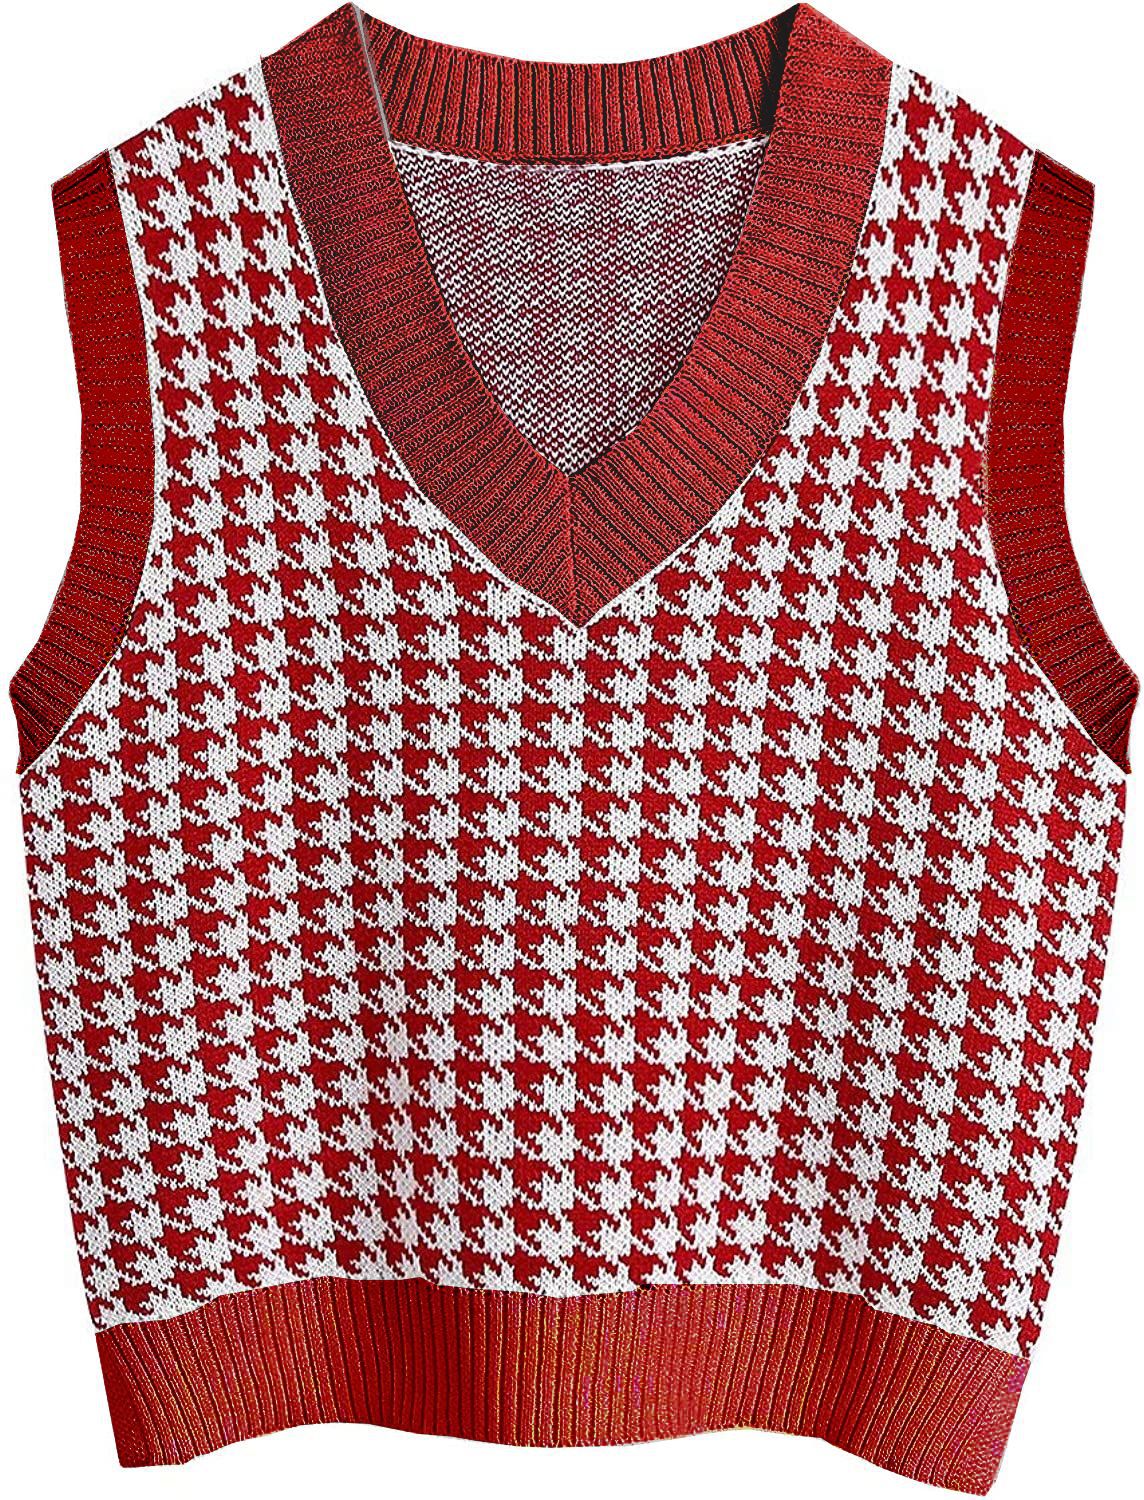 Houndstooth knitted vest